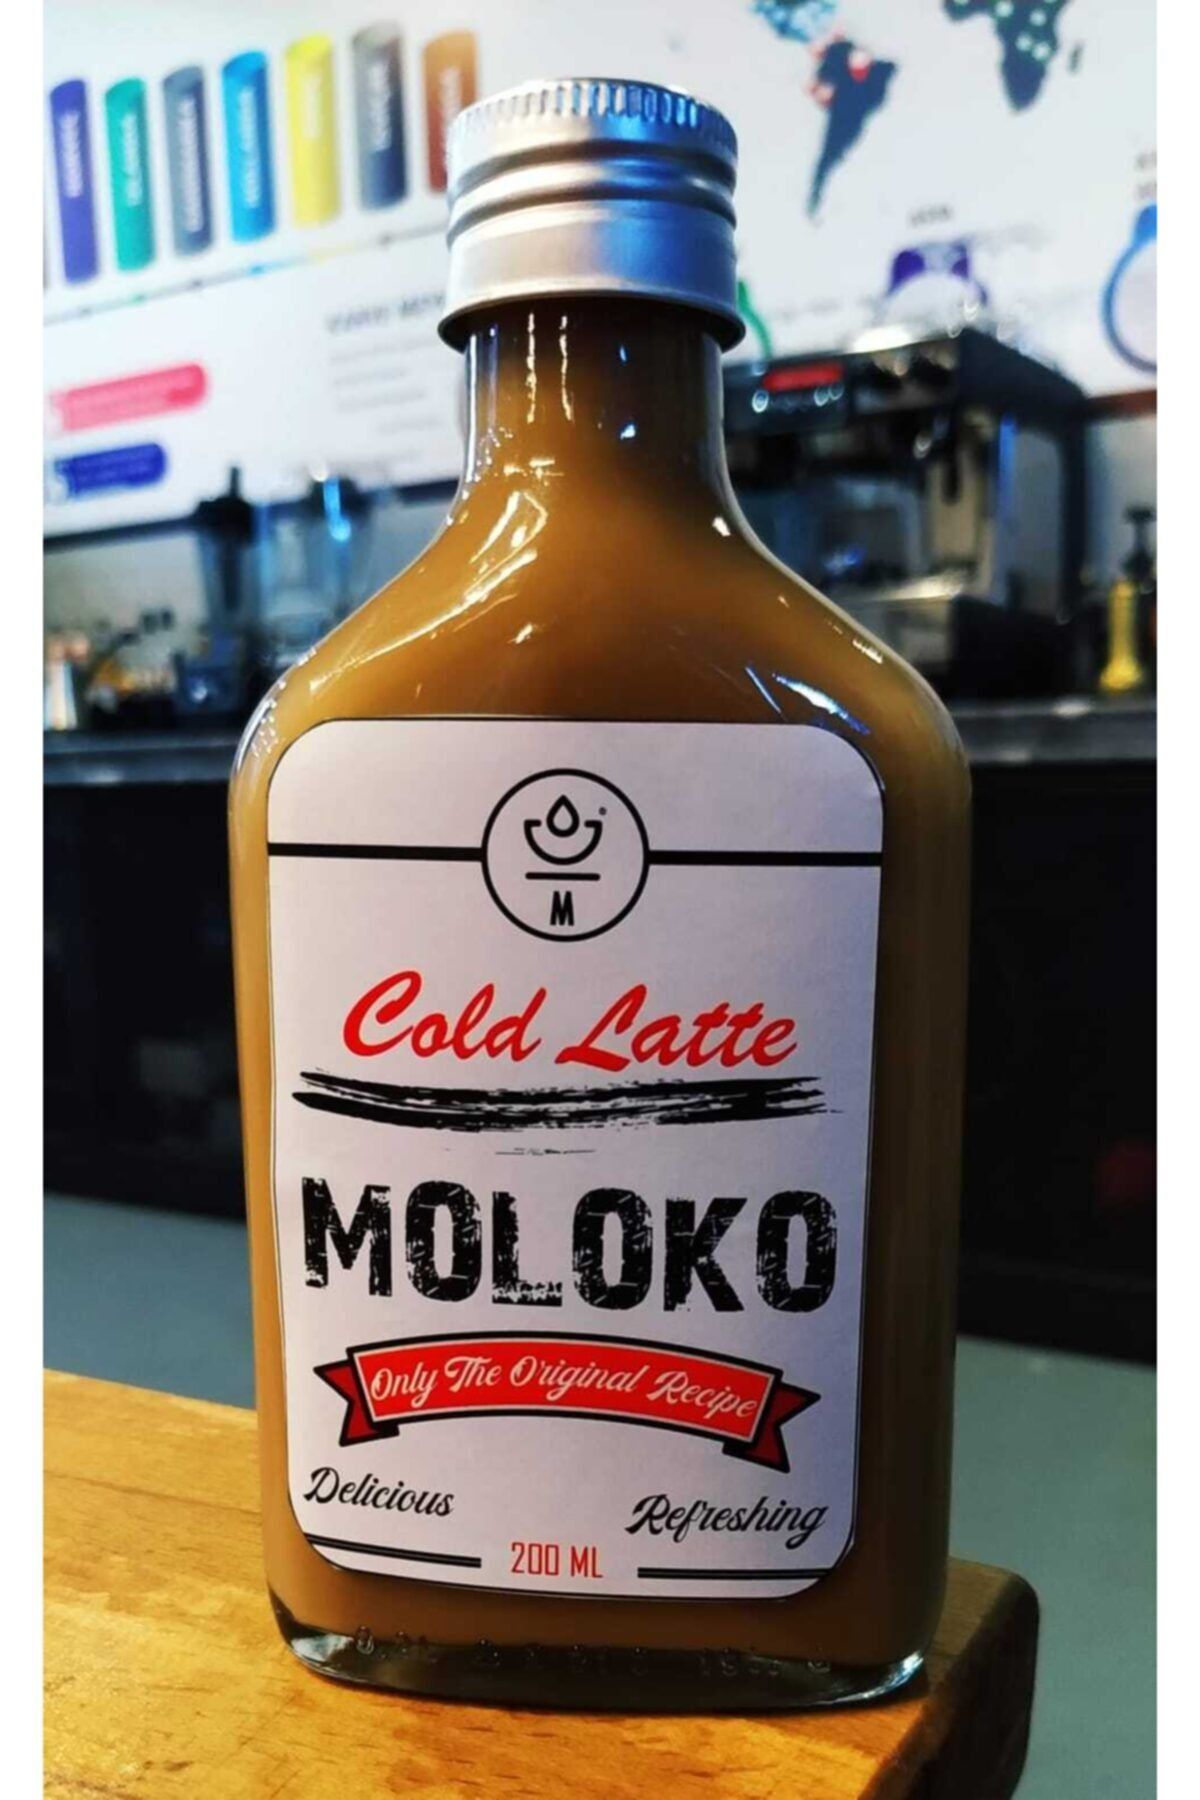 Moloko Cold Latte Soğuk Sütlü Kahve 200 ml